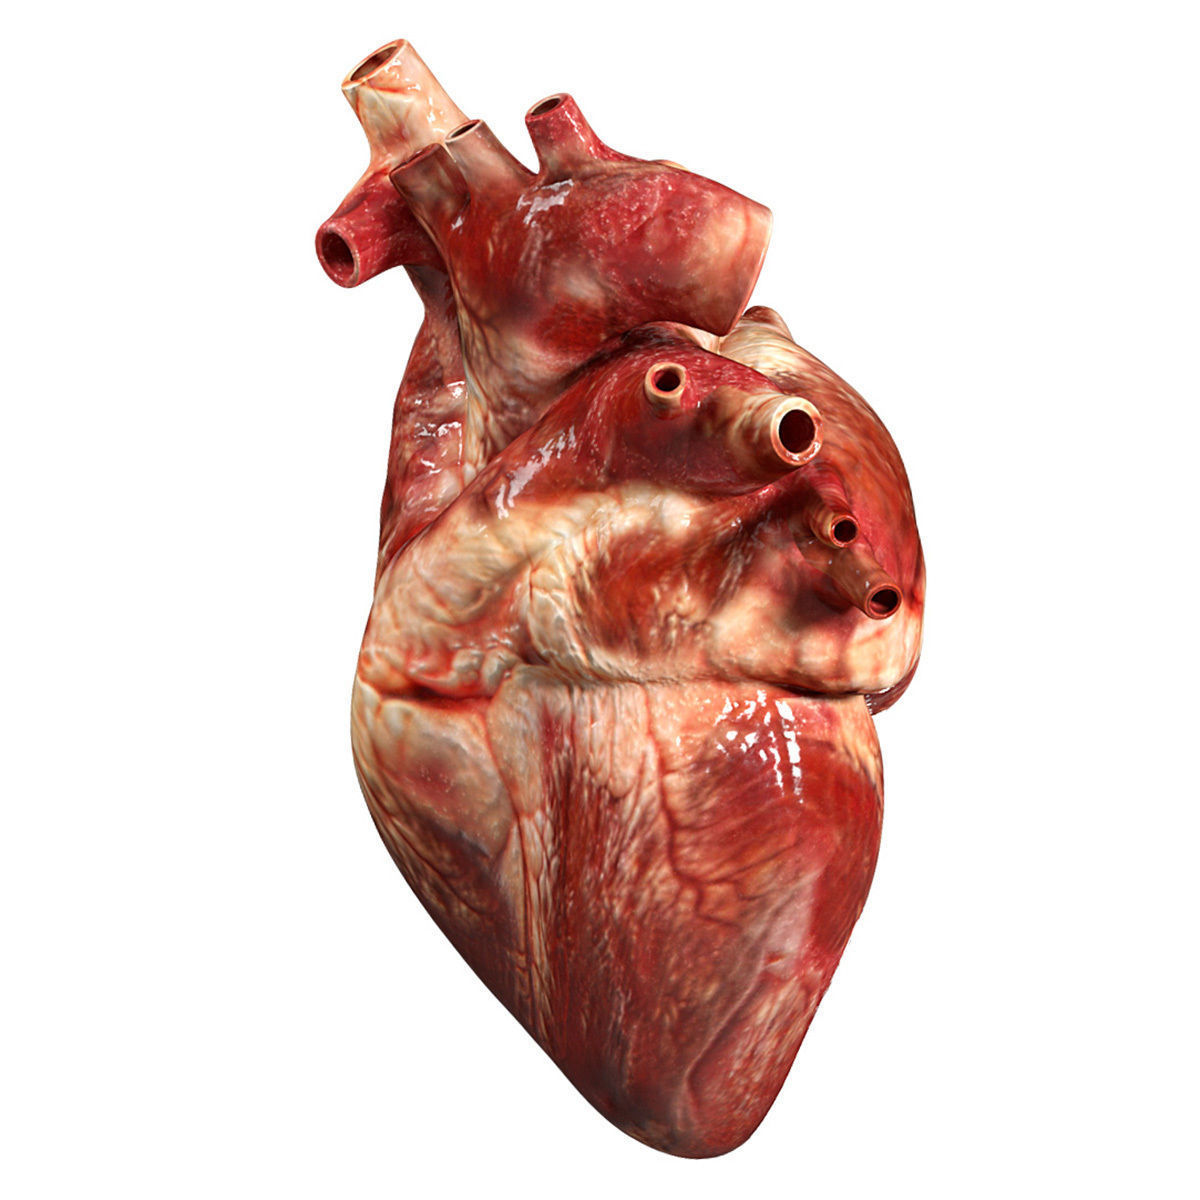 accurate-human-heart-3d-model-obj-3ds-fbx-blend-dae.jpg